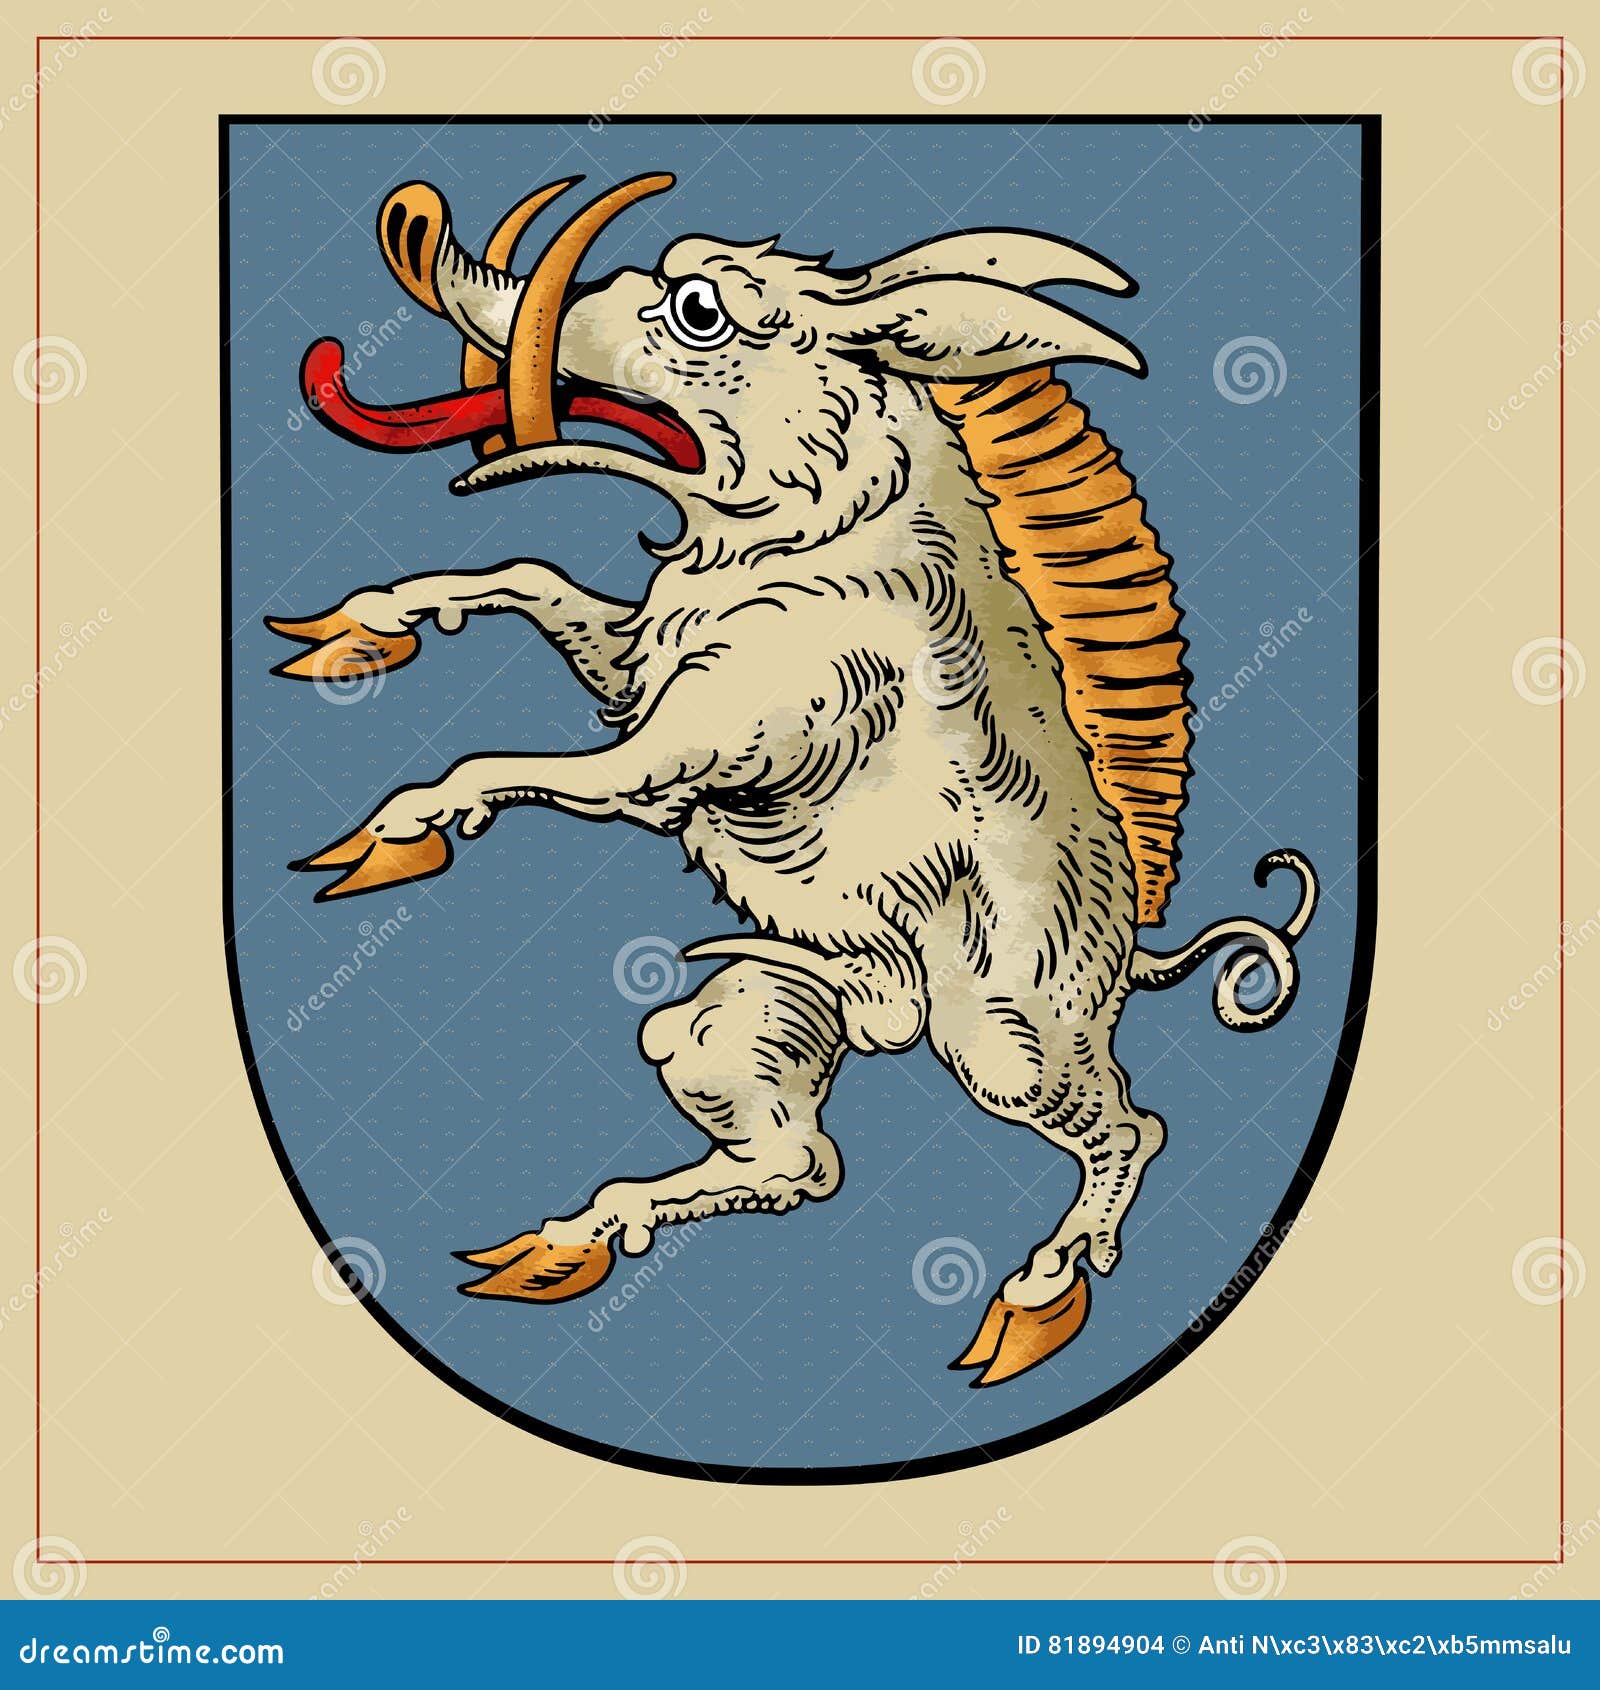 Символ животного герб. Герб с животными. Животные в геральдике. Герб с кабаном. Геральдические животные на гербах.